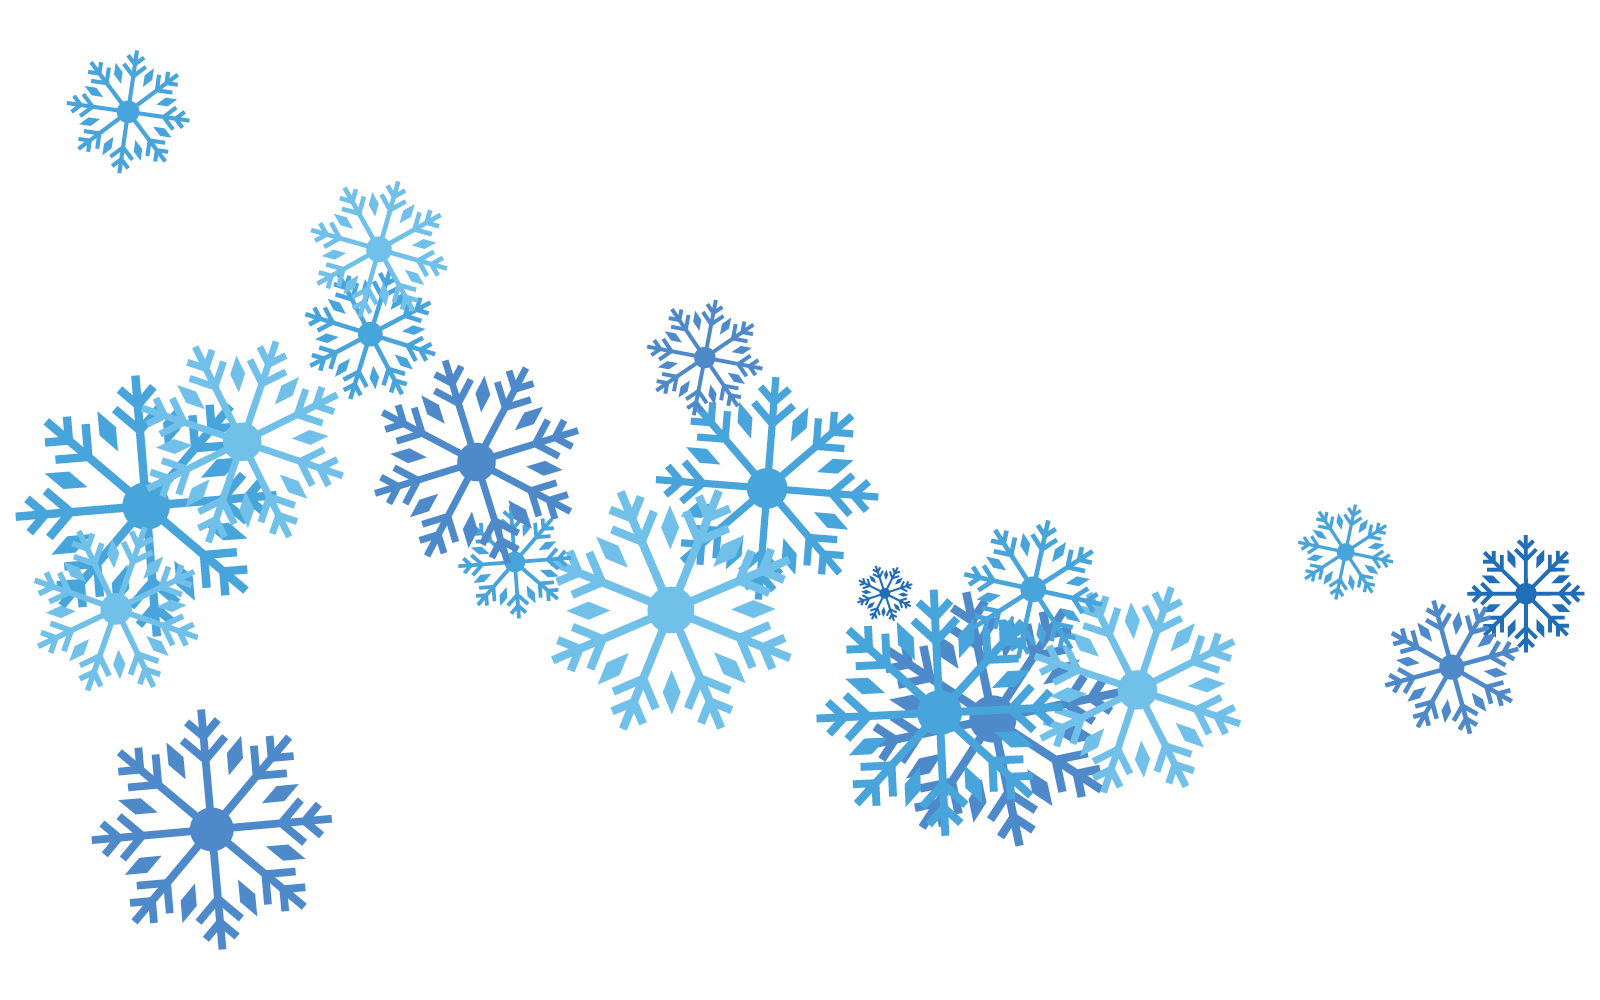 Snowflakes Background Snowfall Illustration Vector Flat Design Template